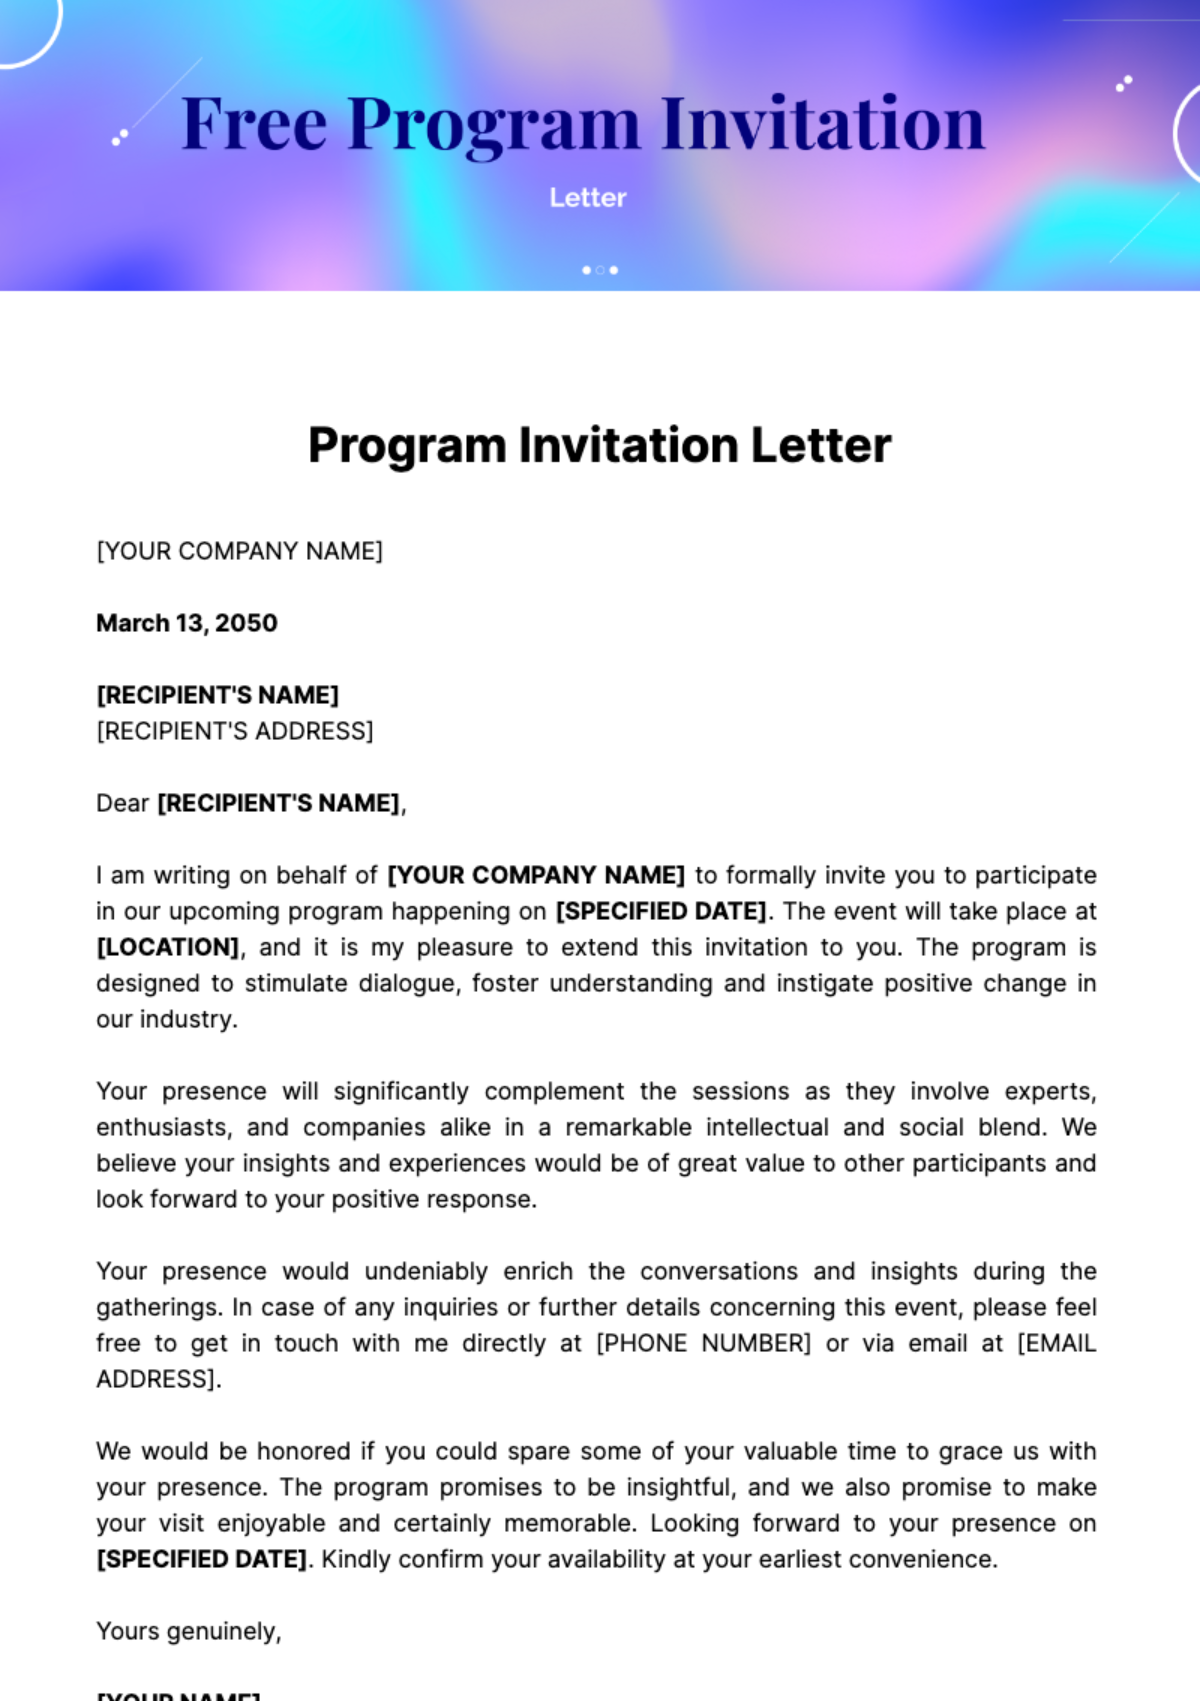 Free Program Invitation Letter Template